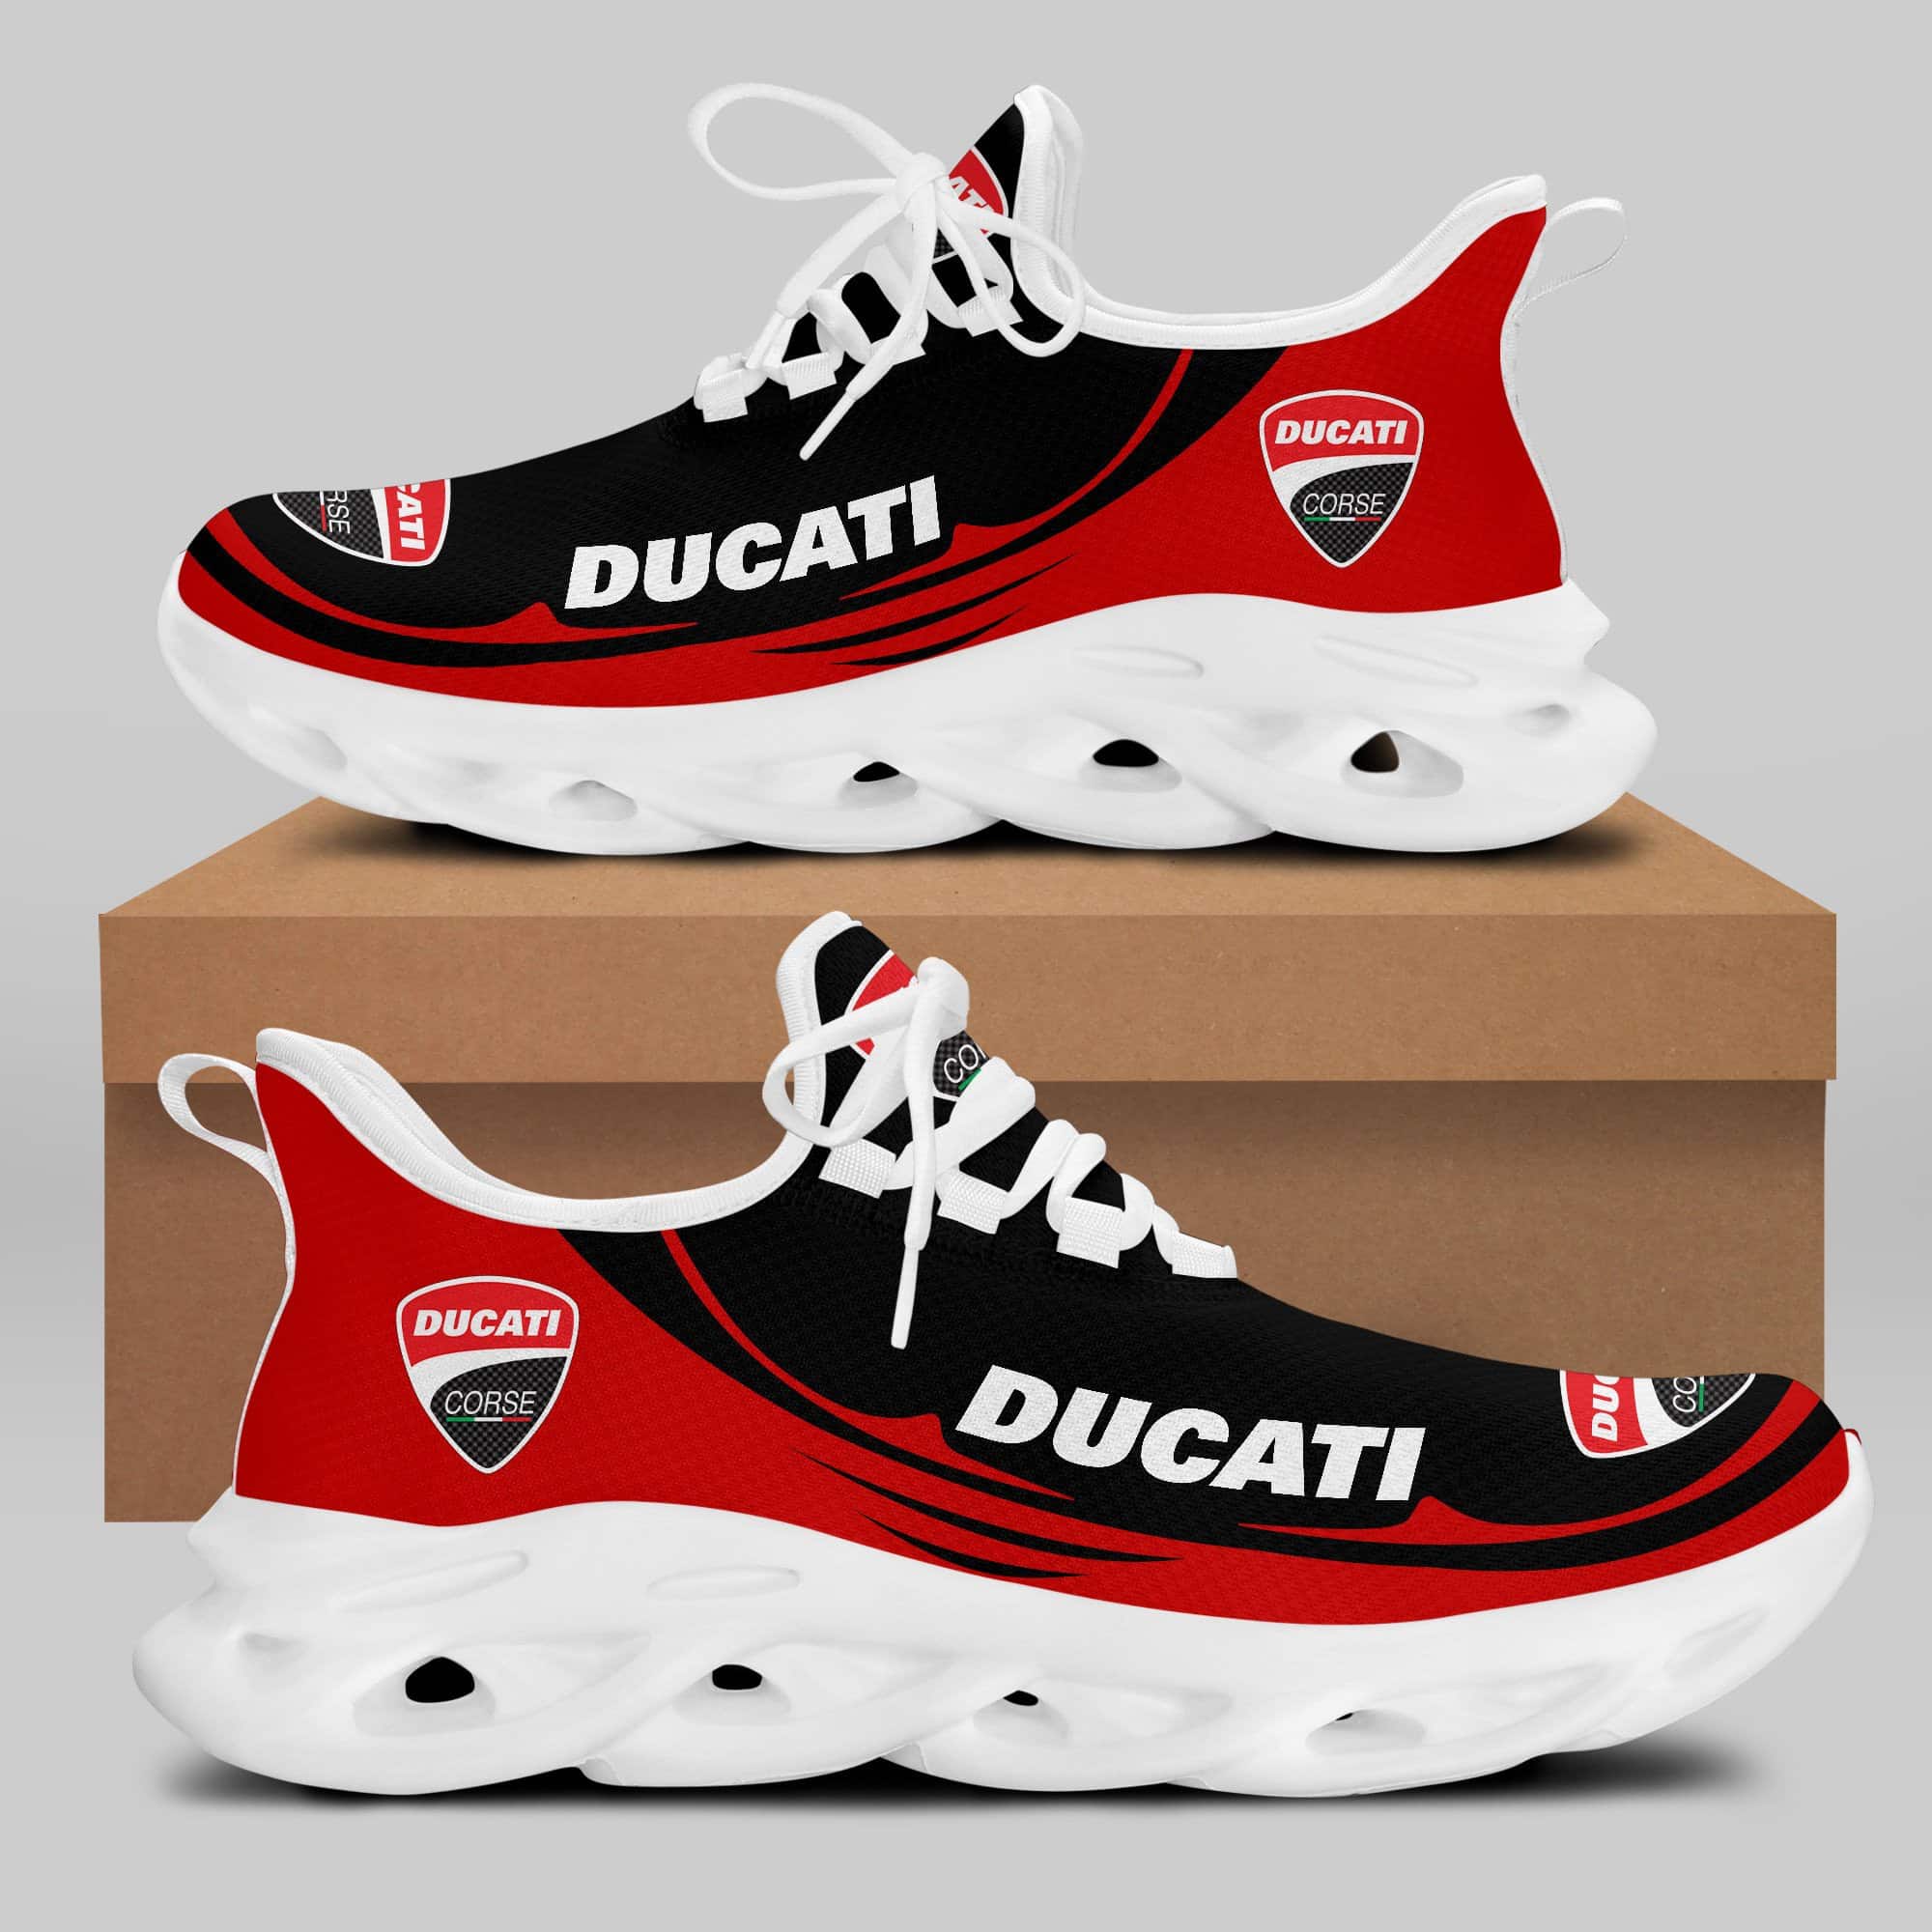 Ducati Racing Running Shoes Max Soul Shoes Sneakers Ver 42 2